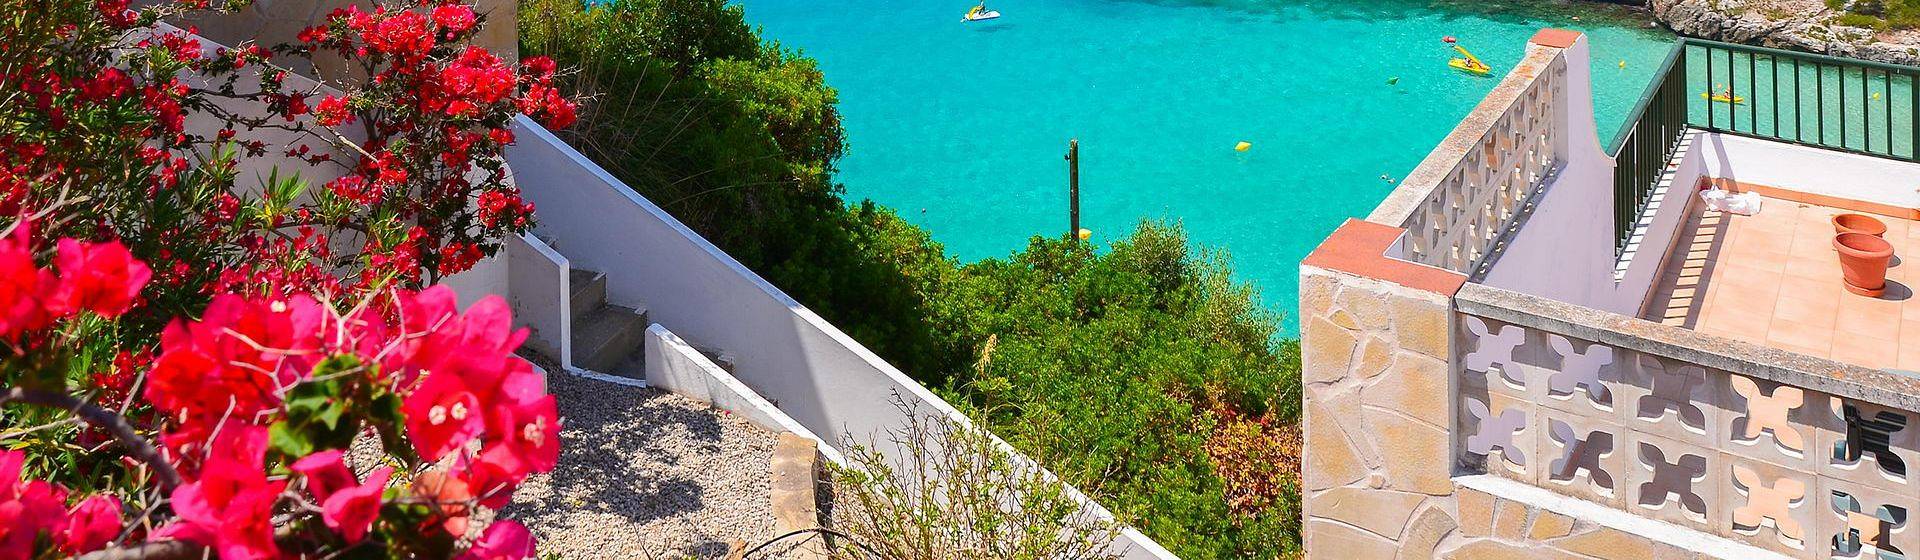 Holidays to Menorca Image